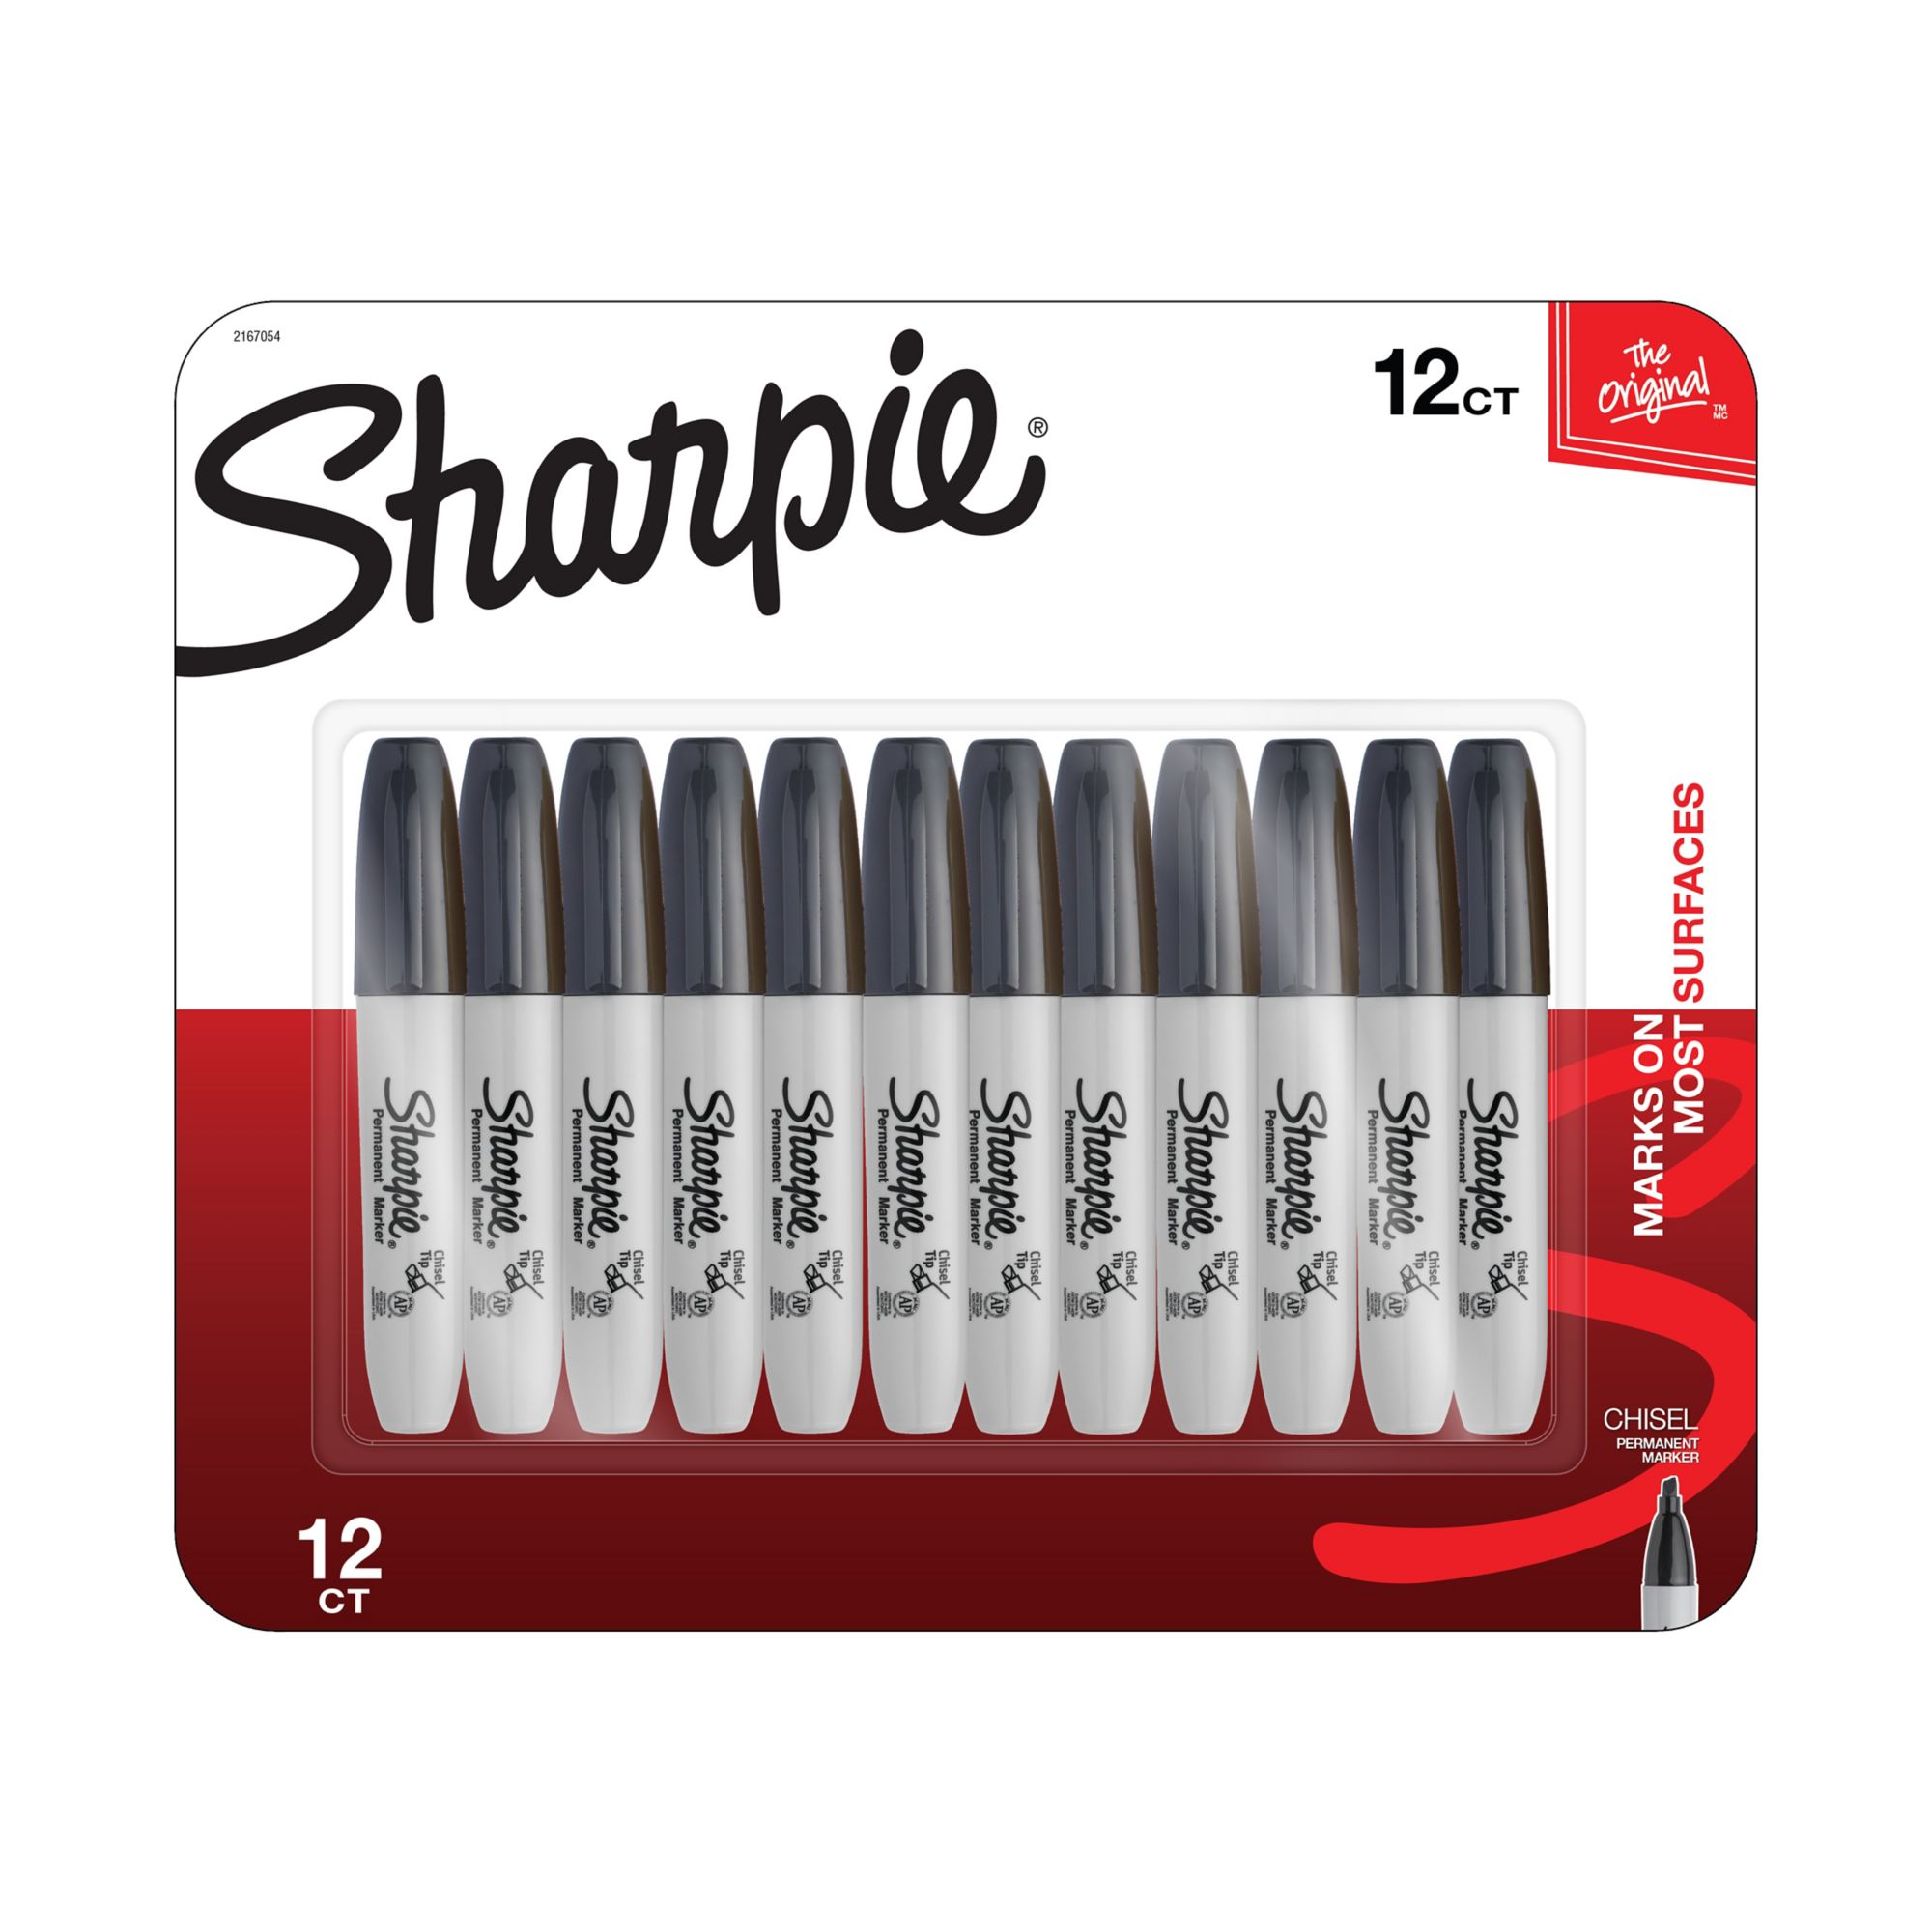 Sharpie Chisel Marker Black, 12 ct.